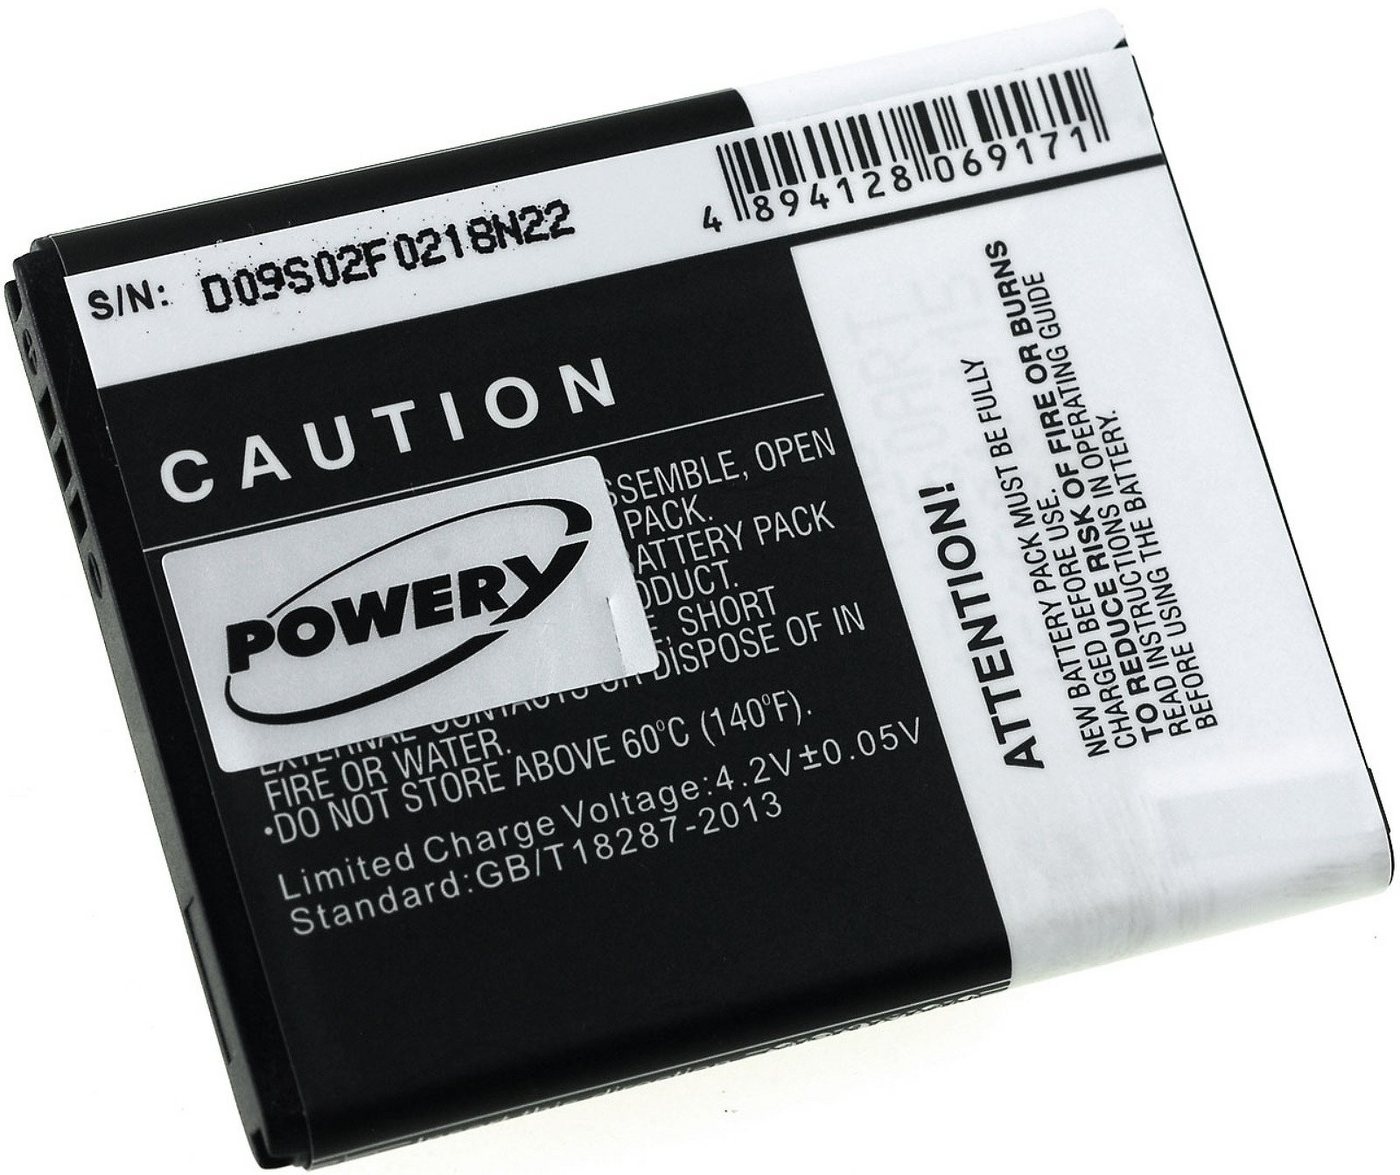 Powery Powerakku für Smartphone Samsung GT-S5570 Smartphone-Akku 1300 mAh (3.7 V) schwarz